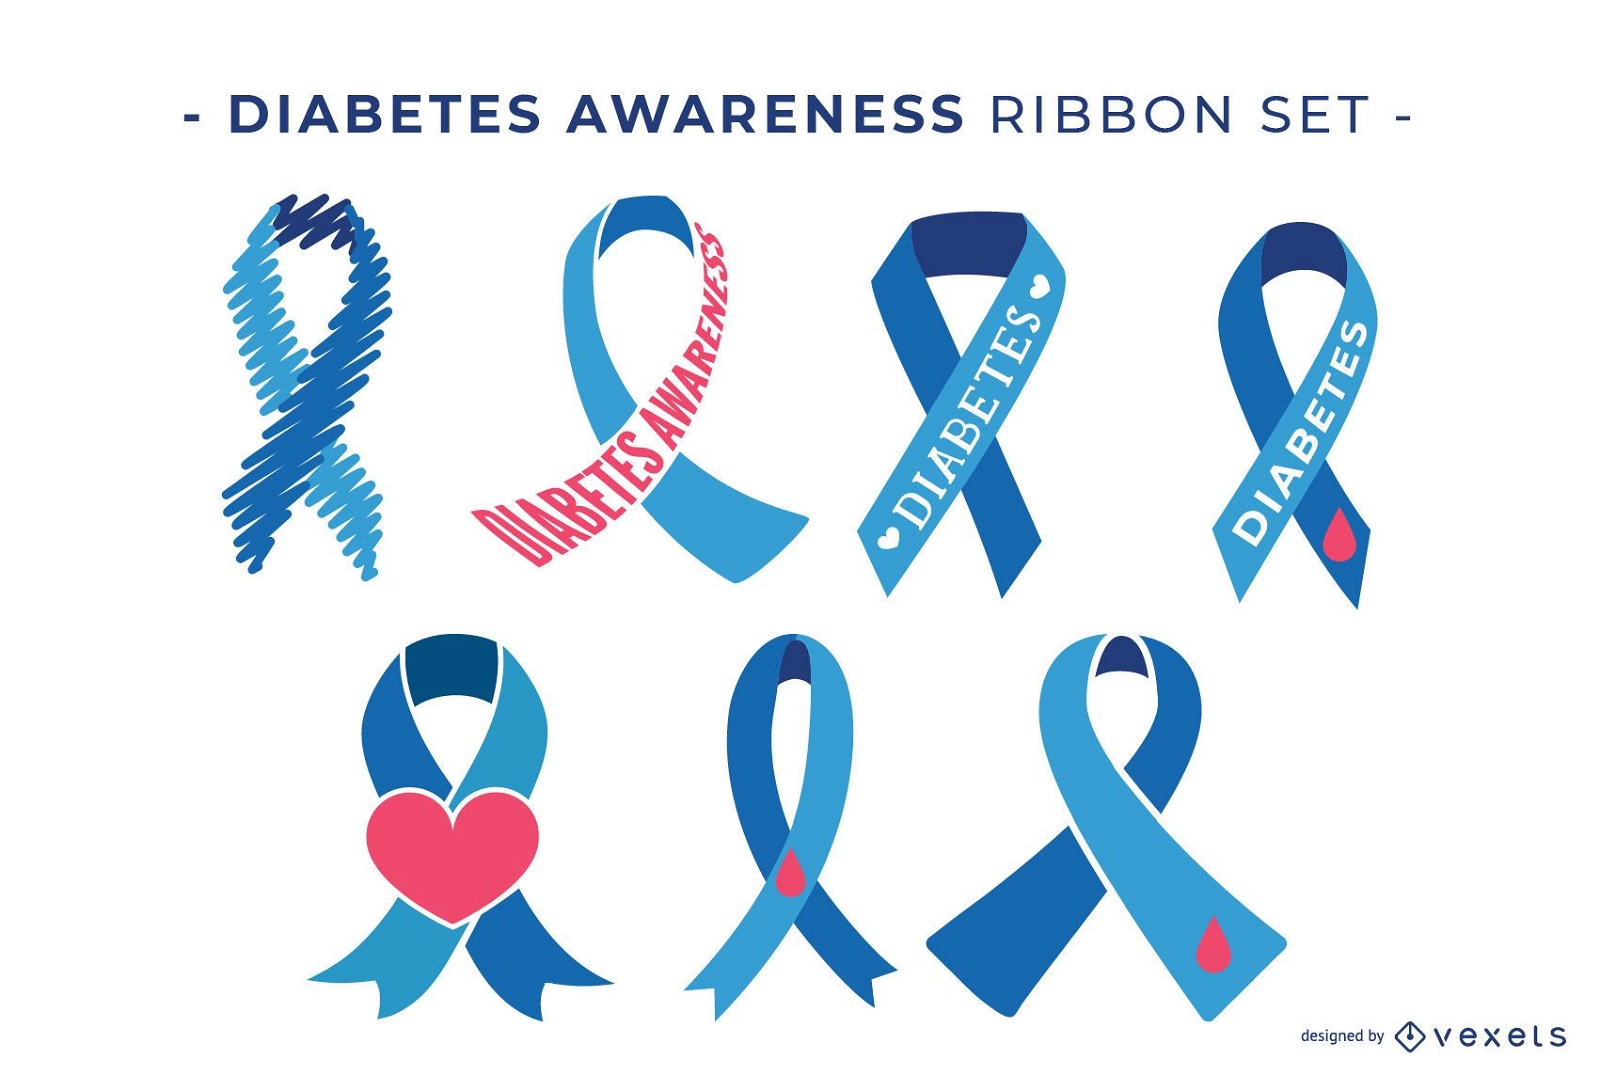 Diabetes awareness ribbon set